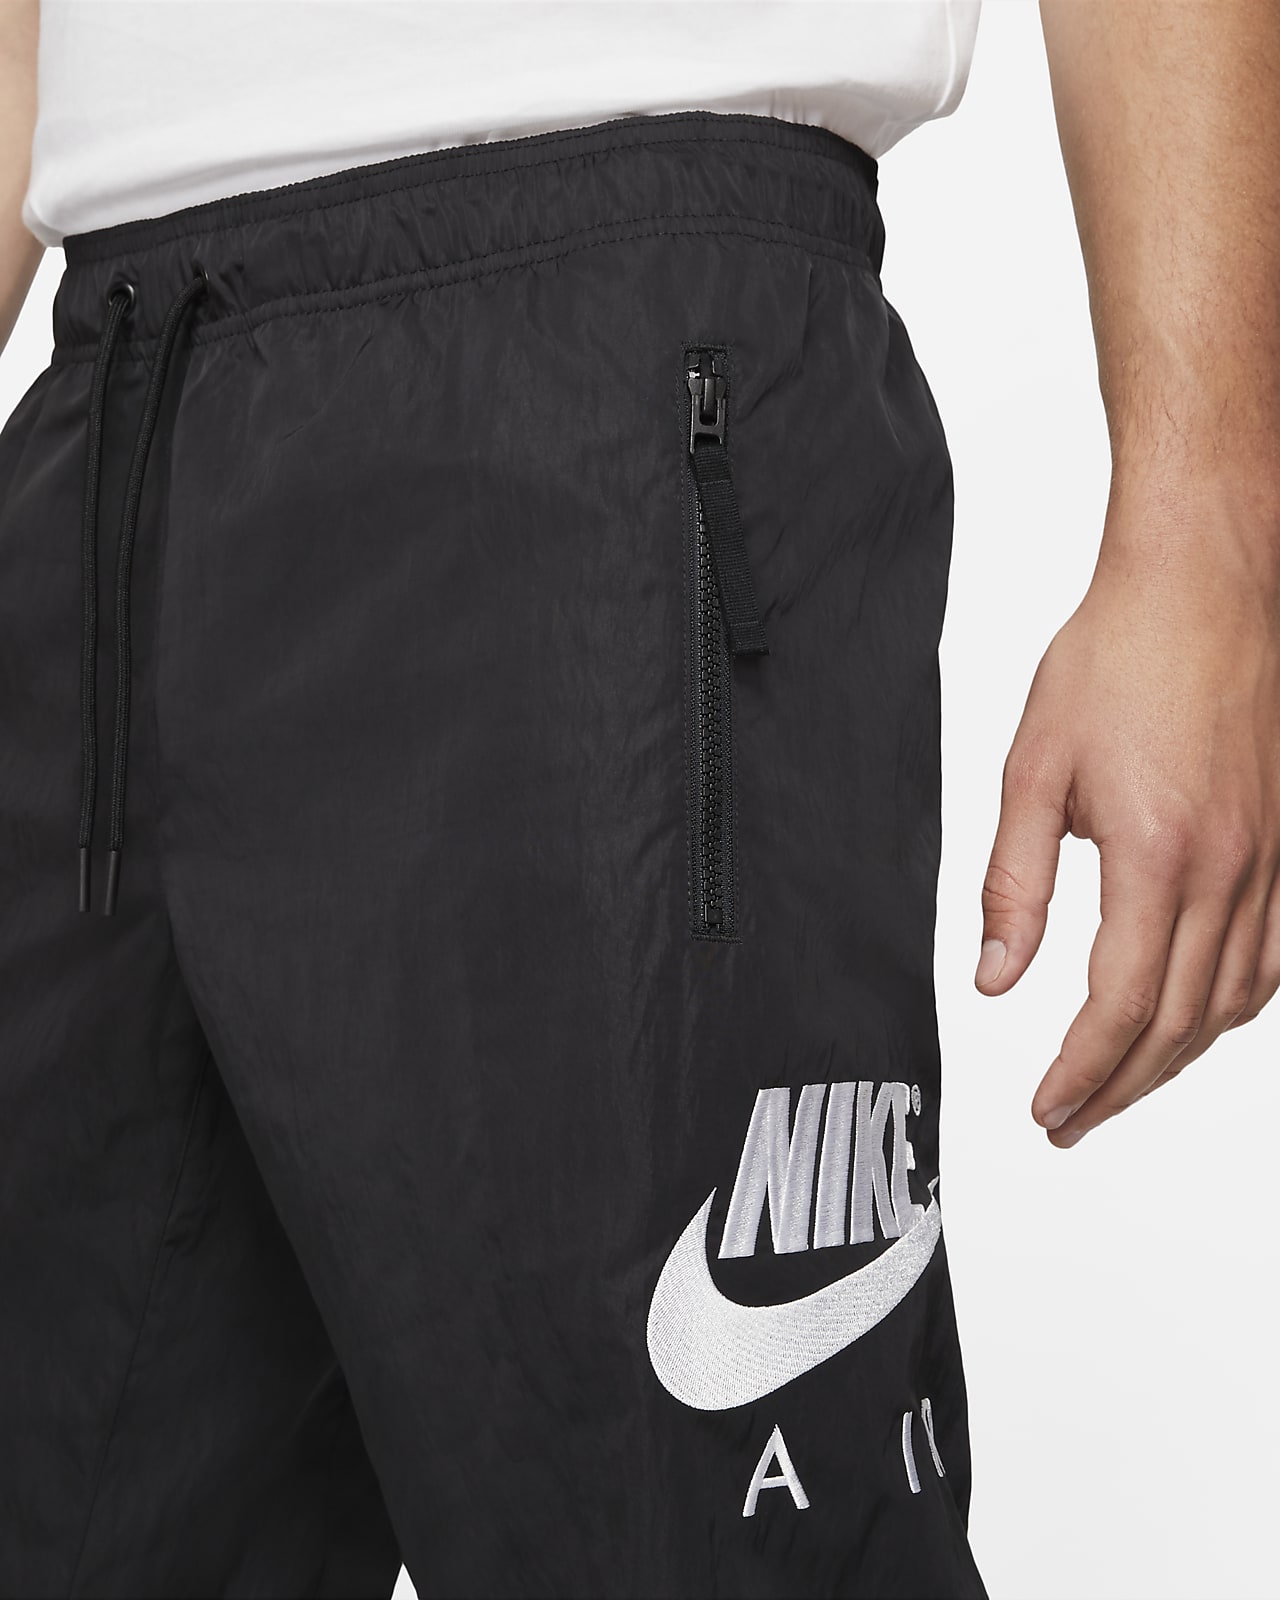 Nike Air Men's Woven Pants